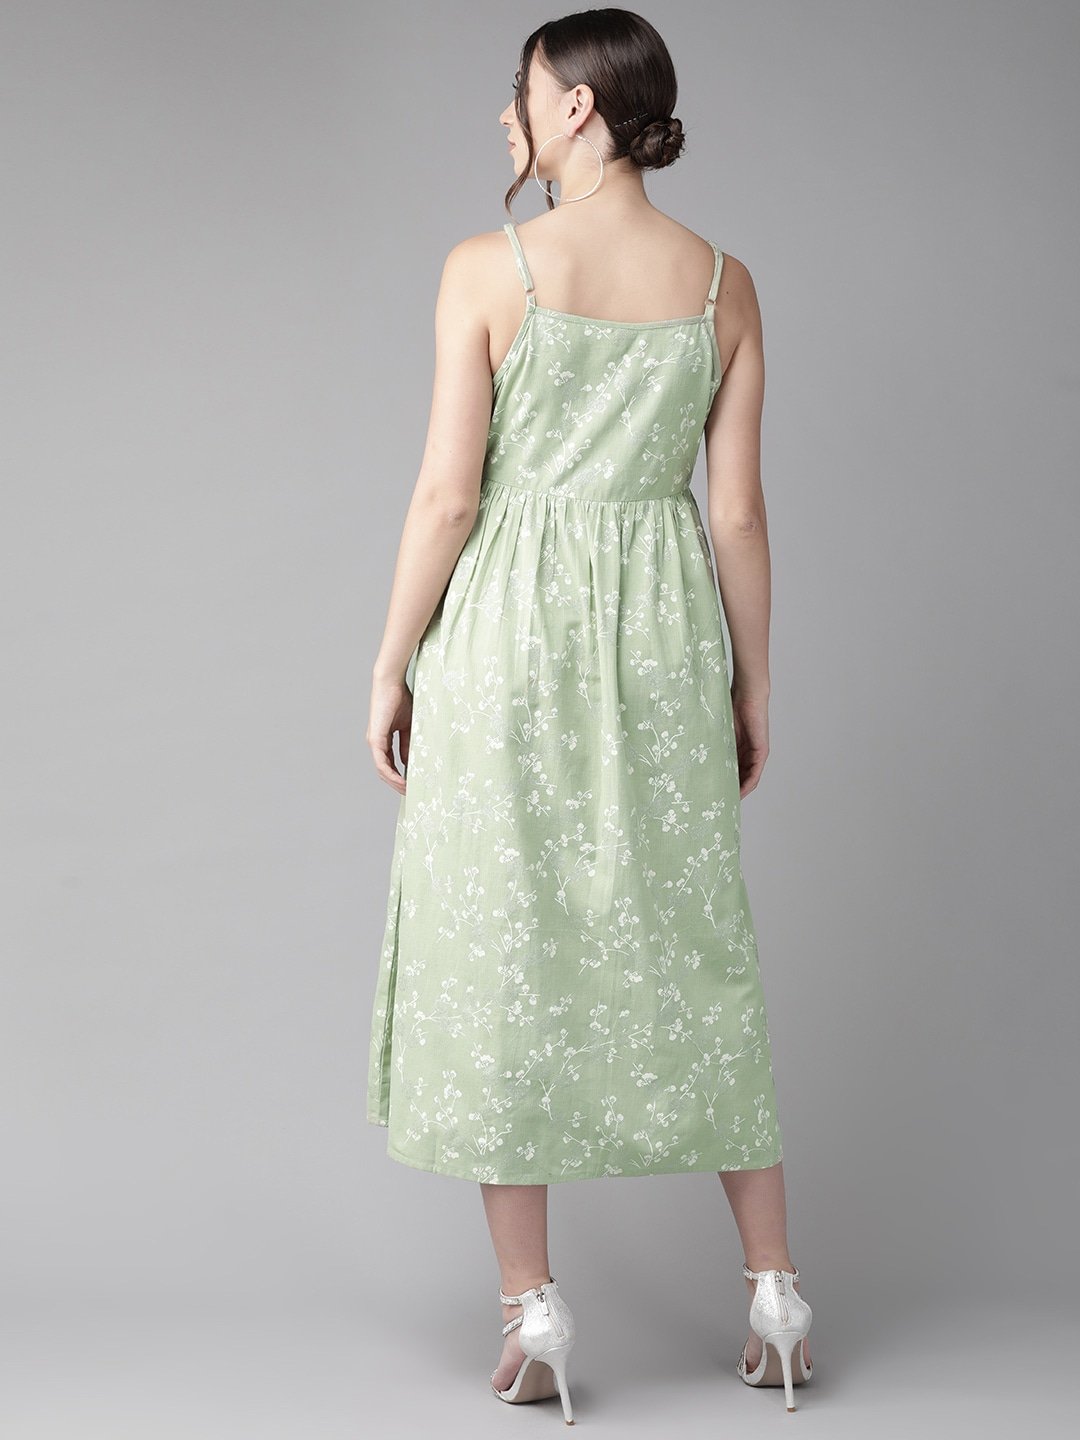 Women's  Green & White Khari Print A-Line Dress - AKS